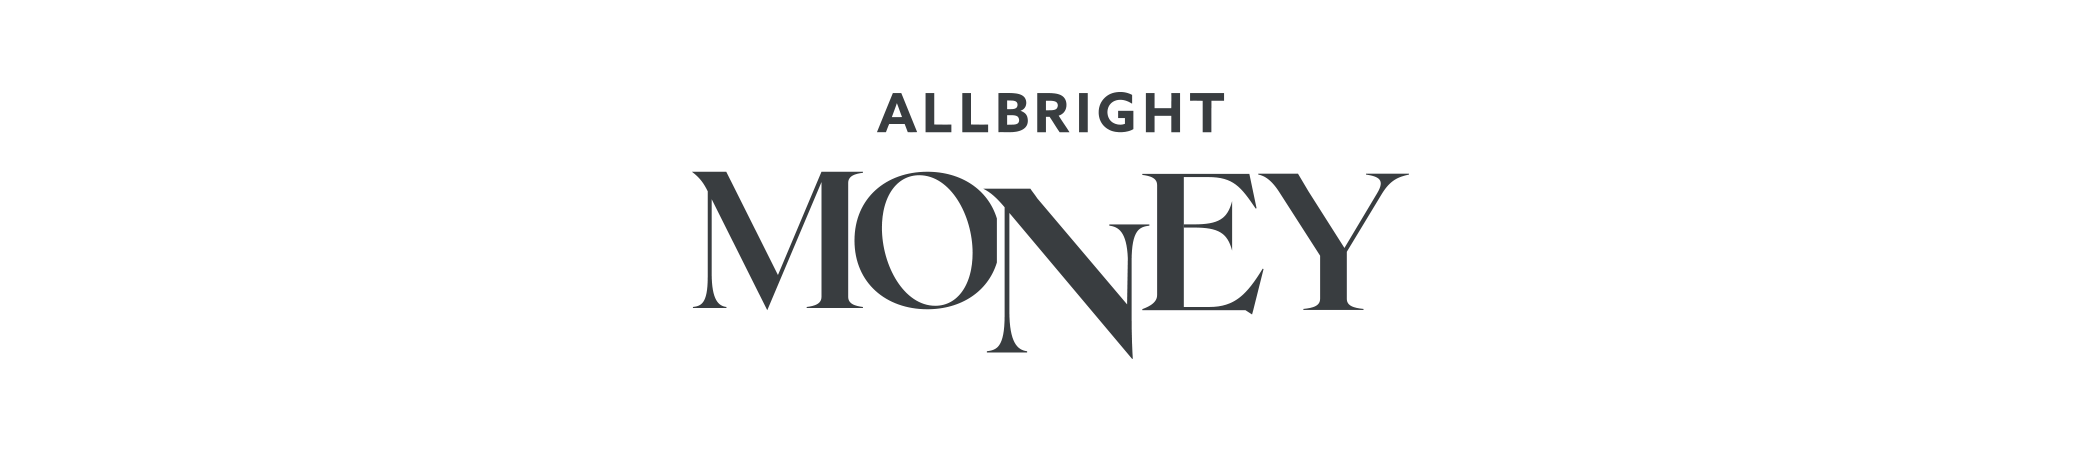 AB Money Logo Feature integration